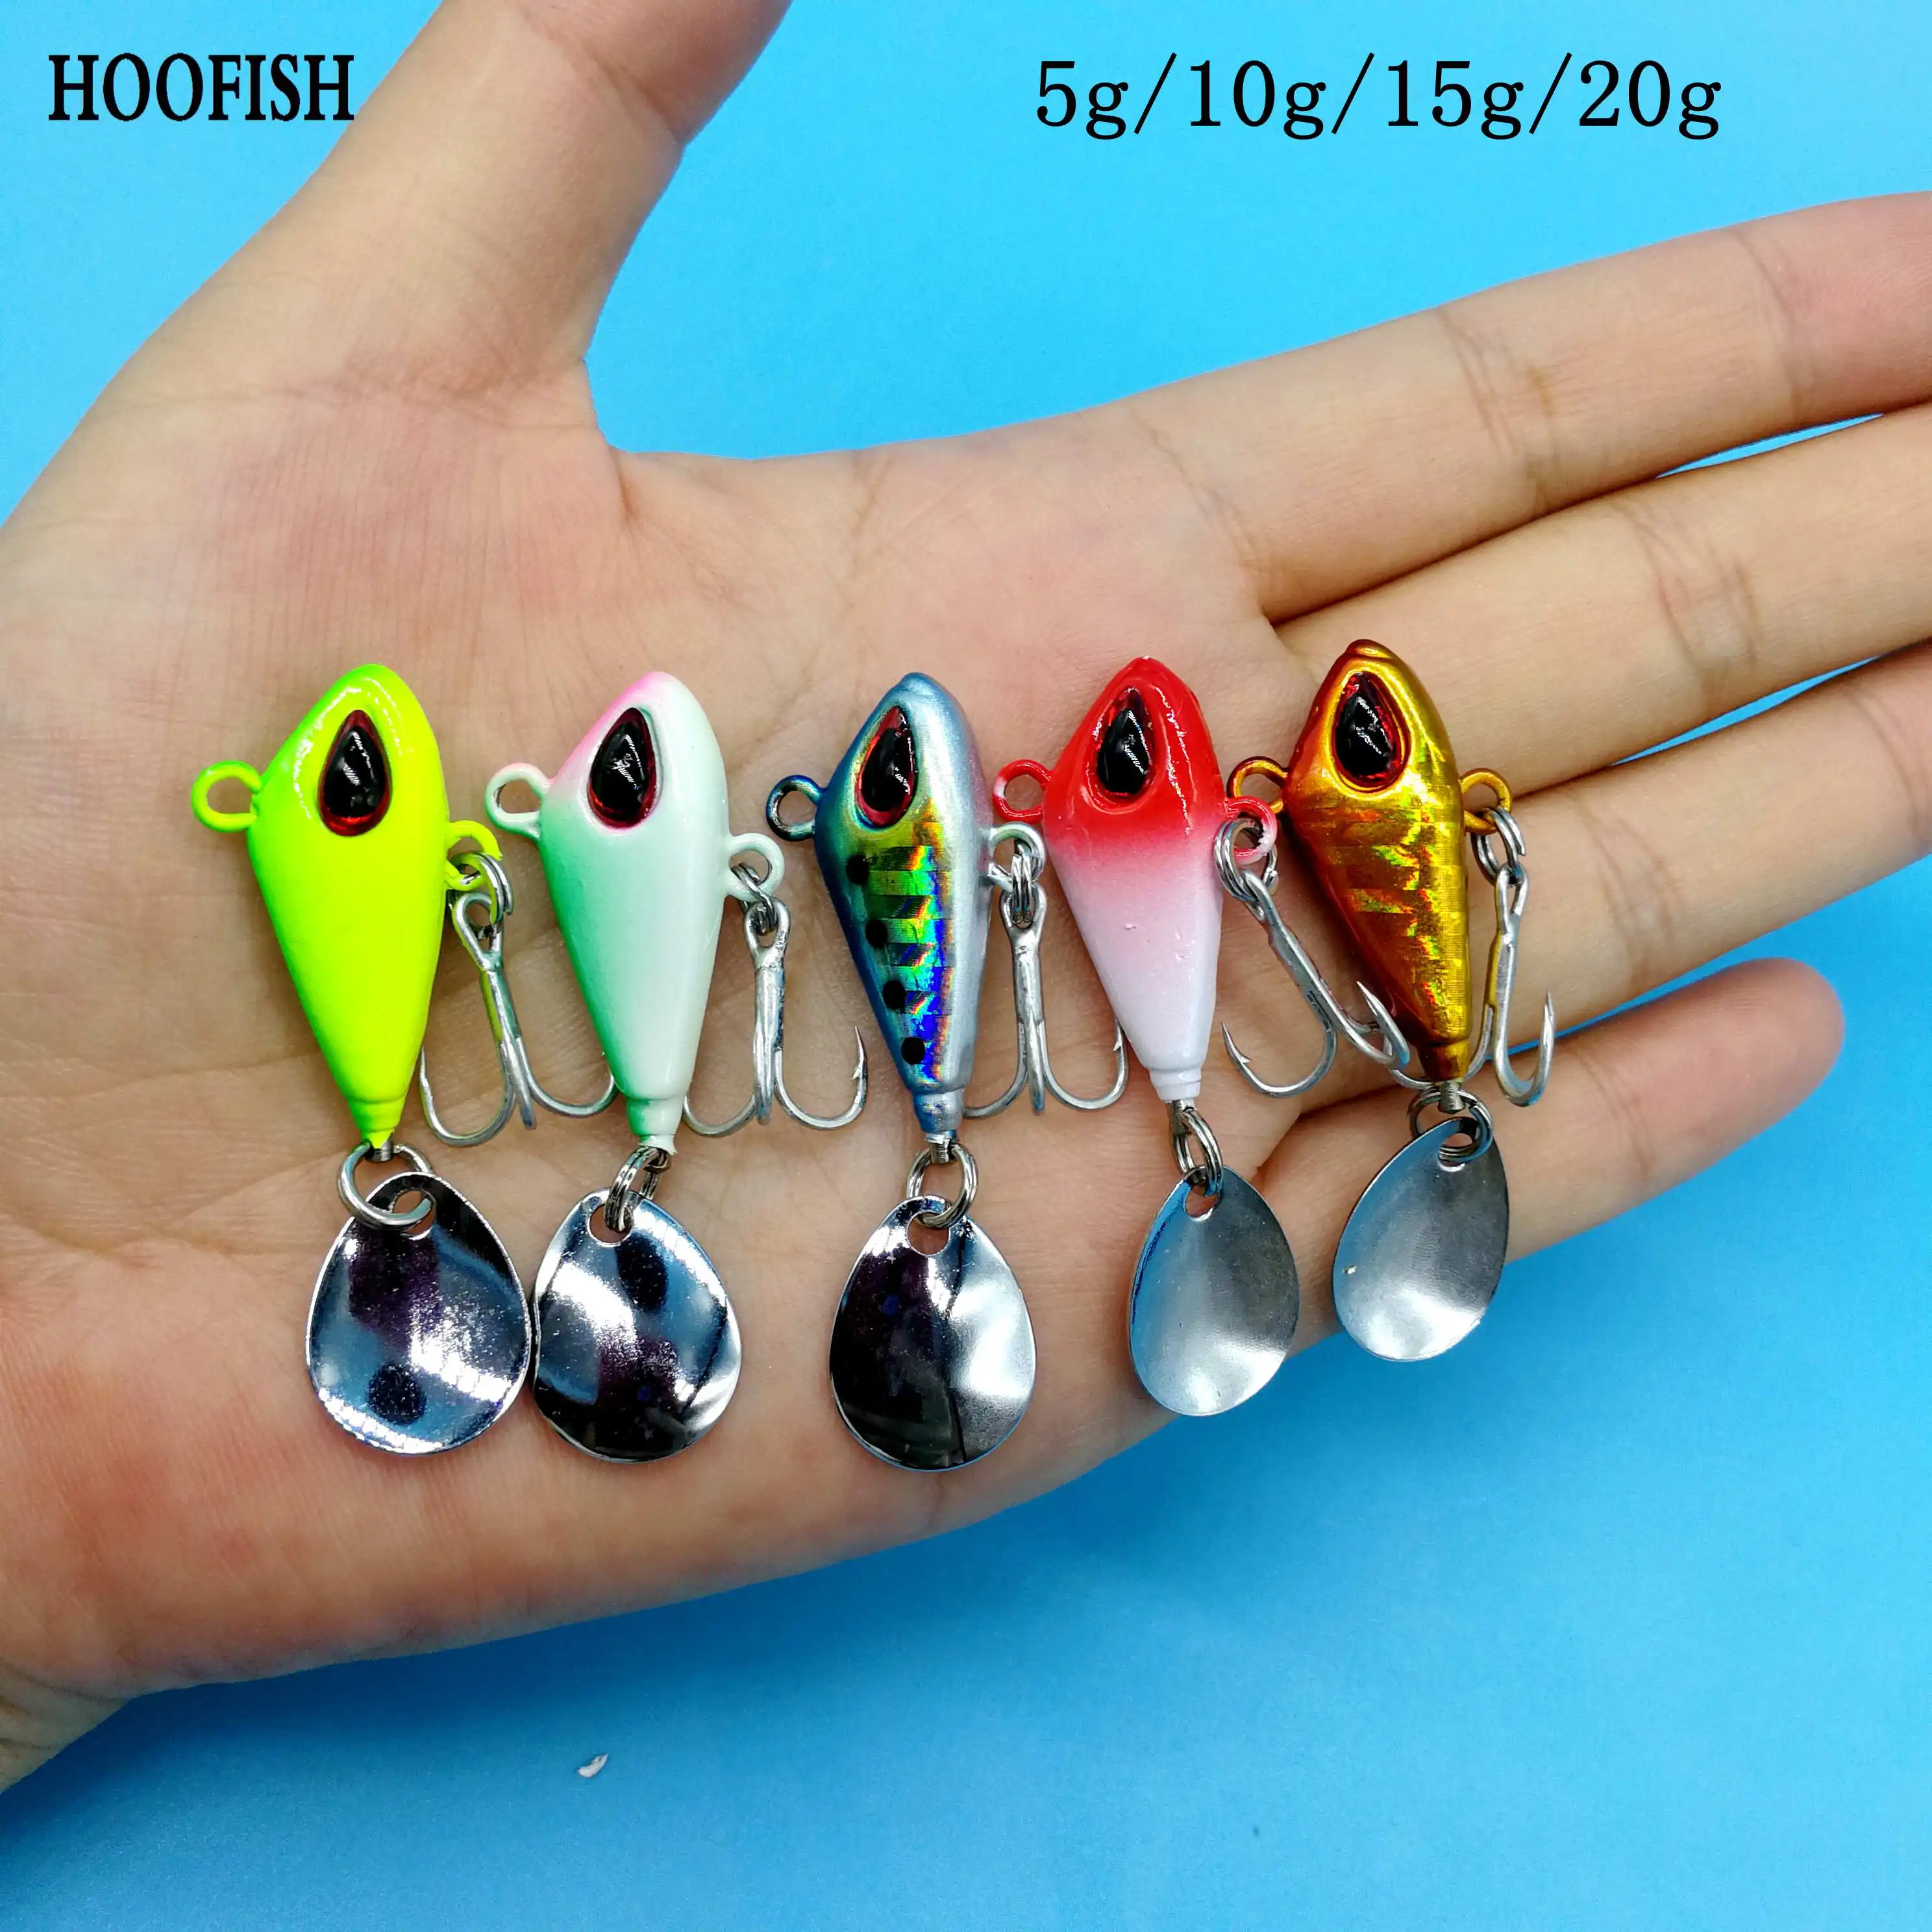 

HOOFISH 3PCS/lot Metal Mini VIB With Spoon Fishing Lure 5g/10g/15g/20g Crankbait Vibration Spinner Sinking Bait fishing tools